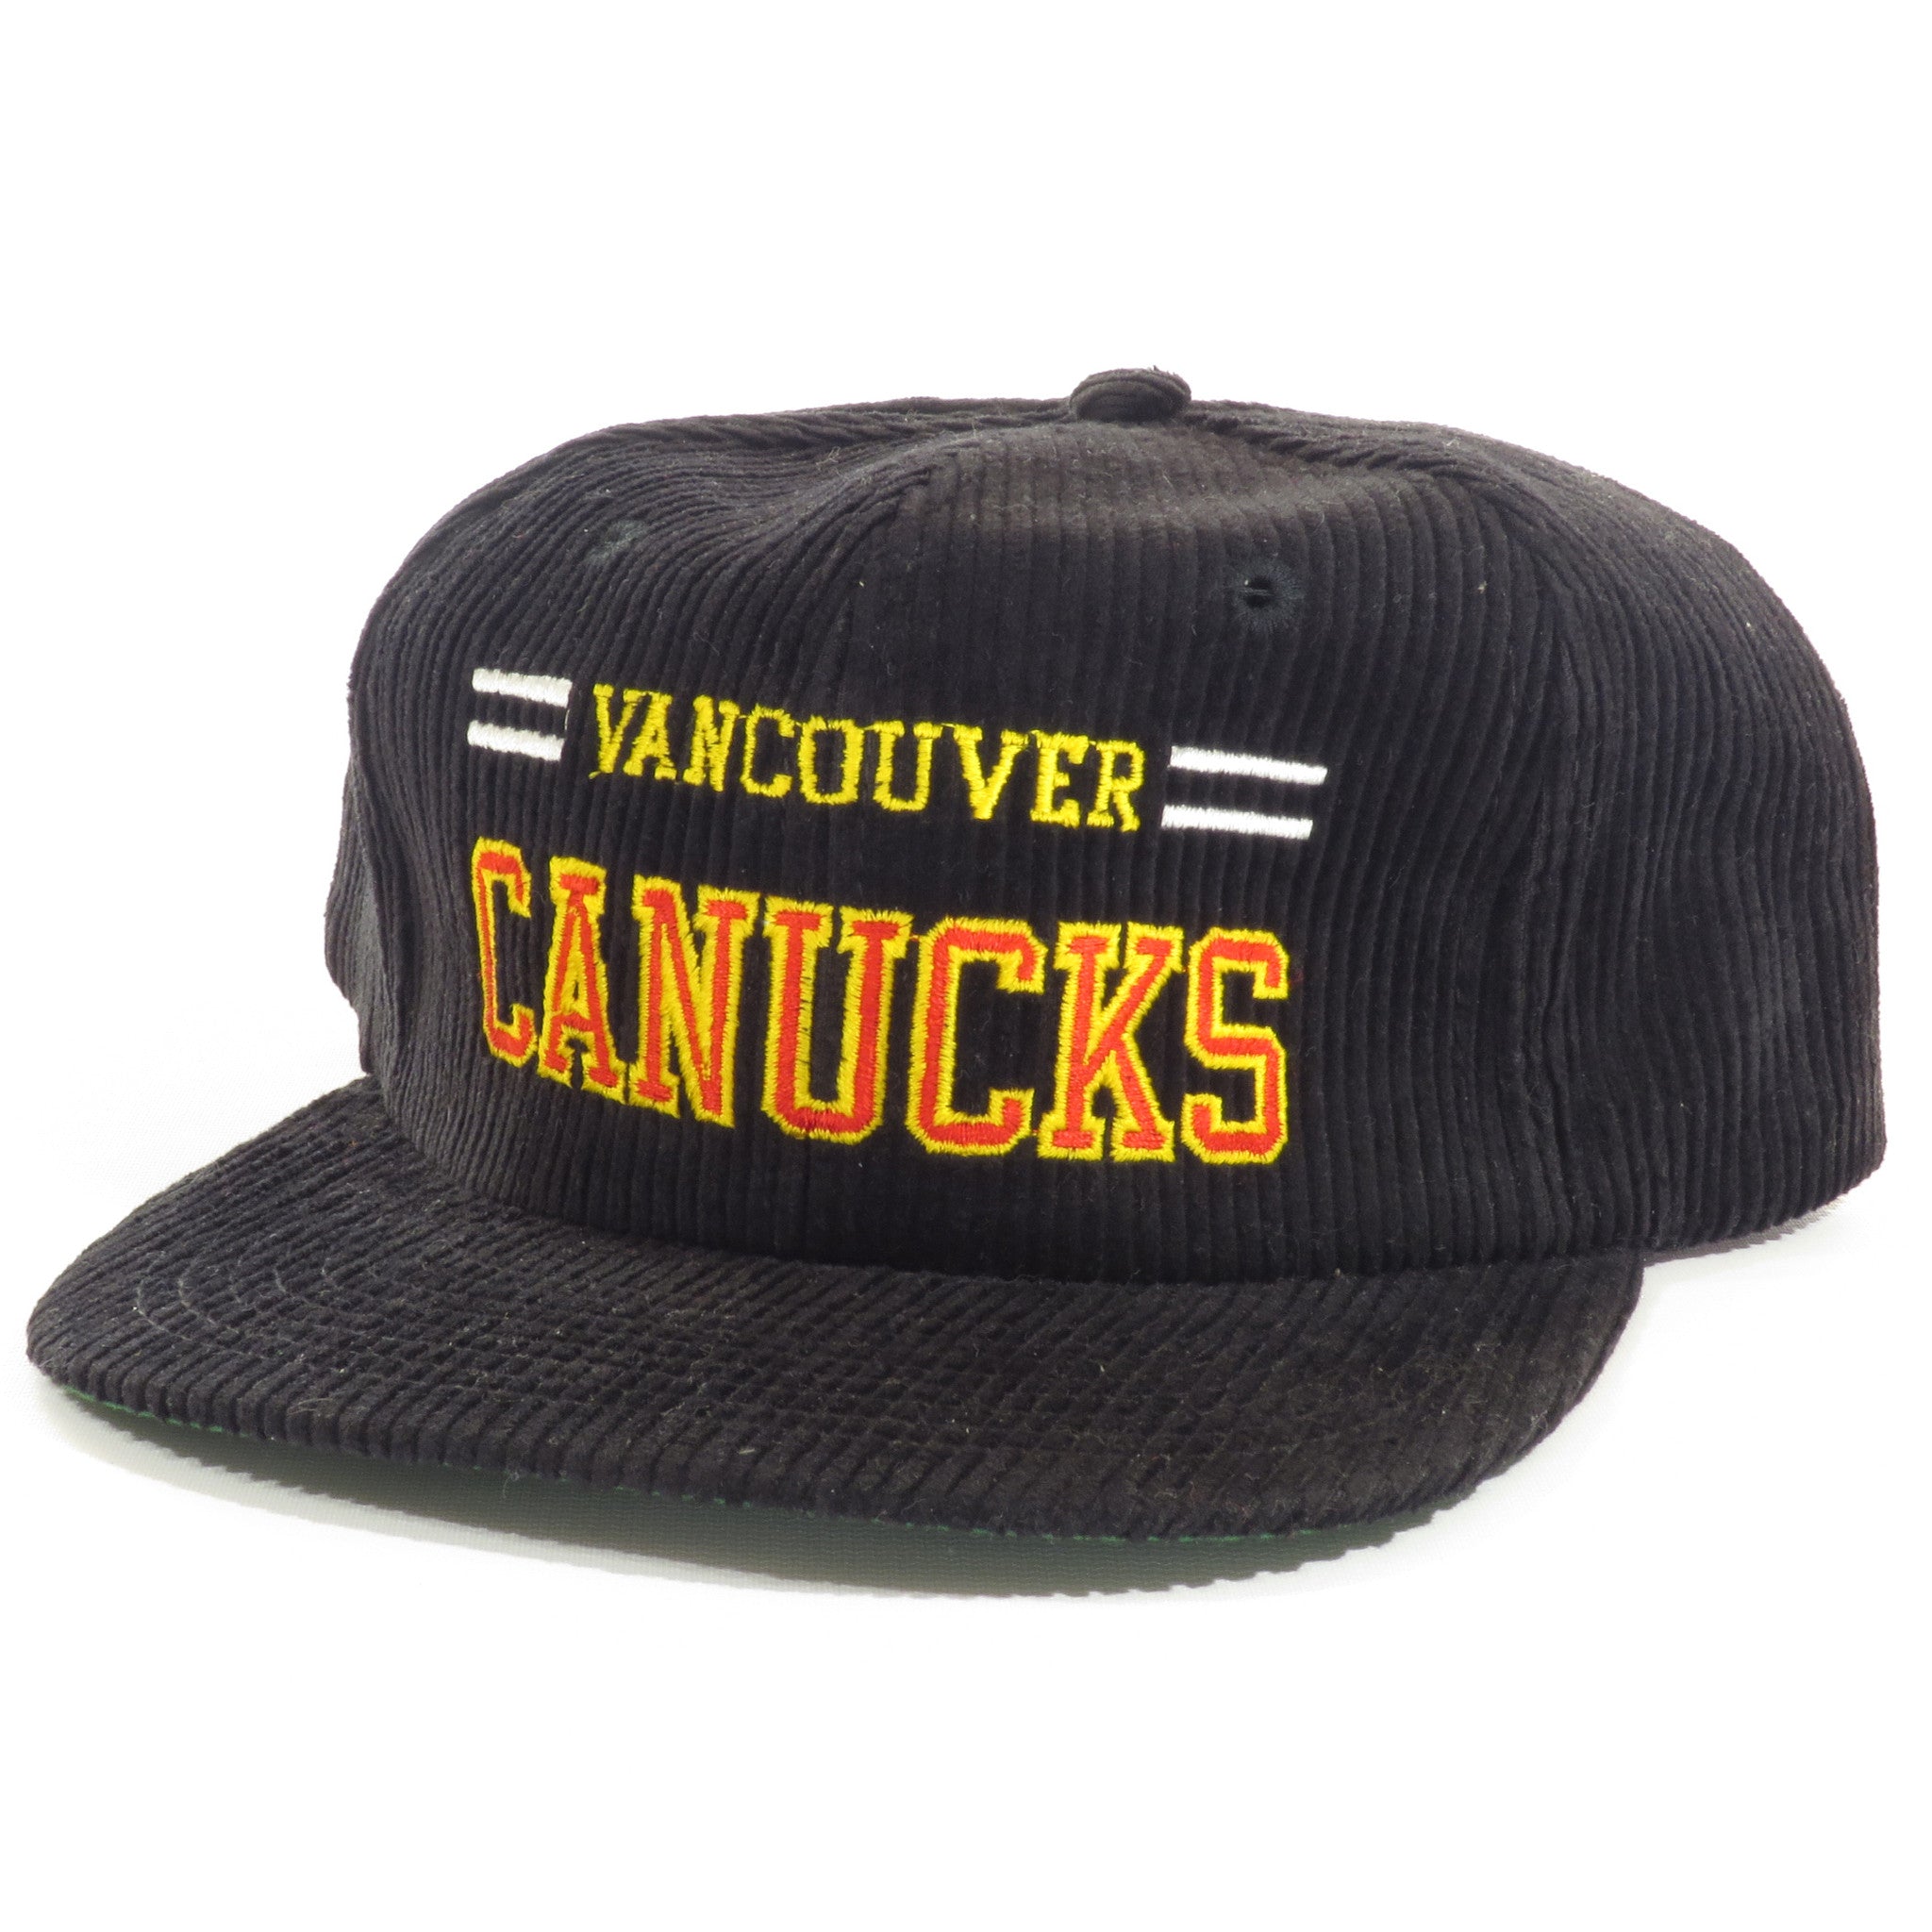 Vancouver Canucks New Era 950 Corduroy Skate Snapback 20 Hat